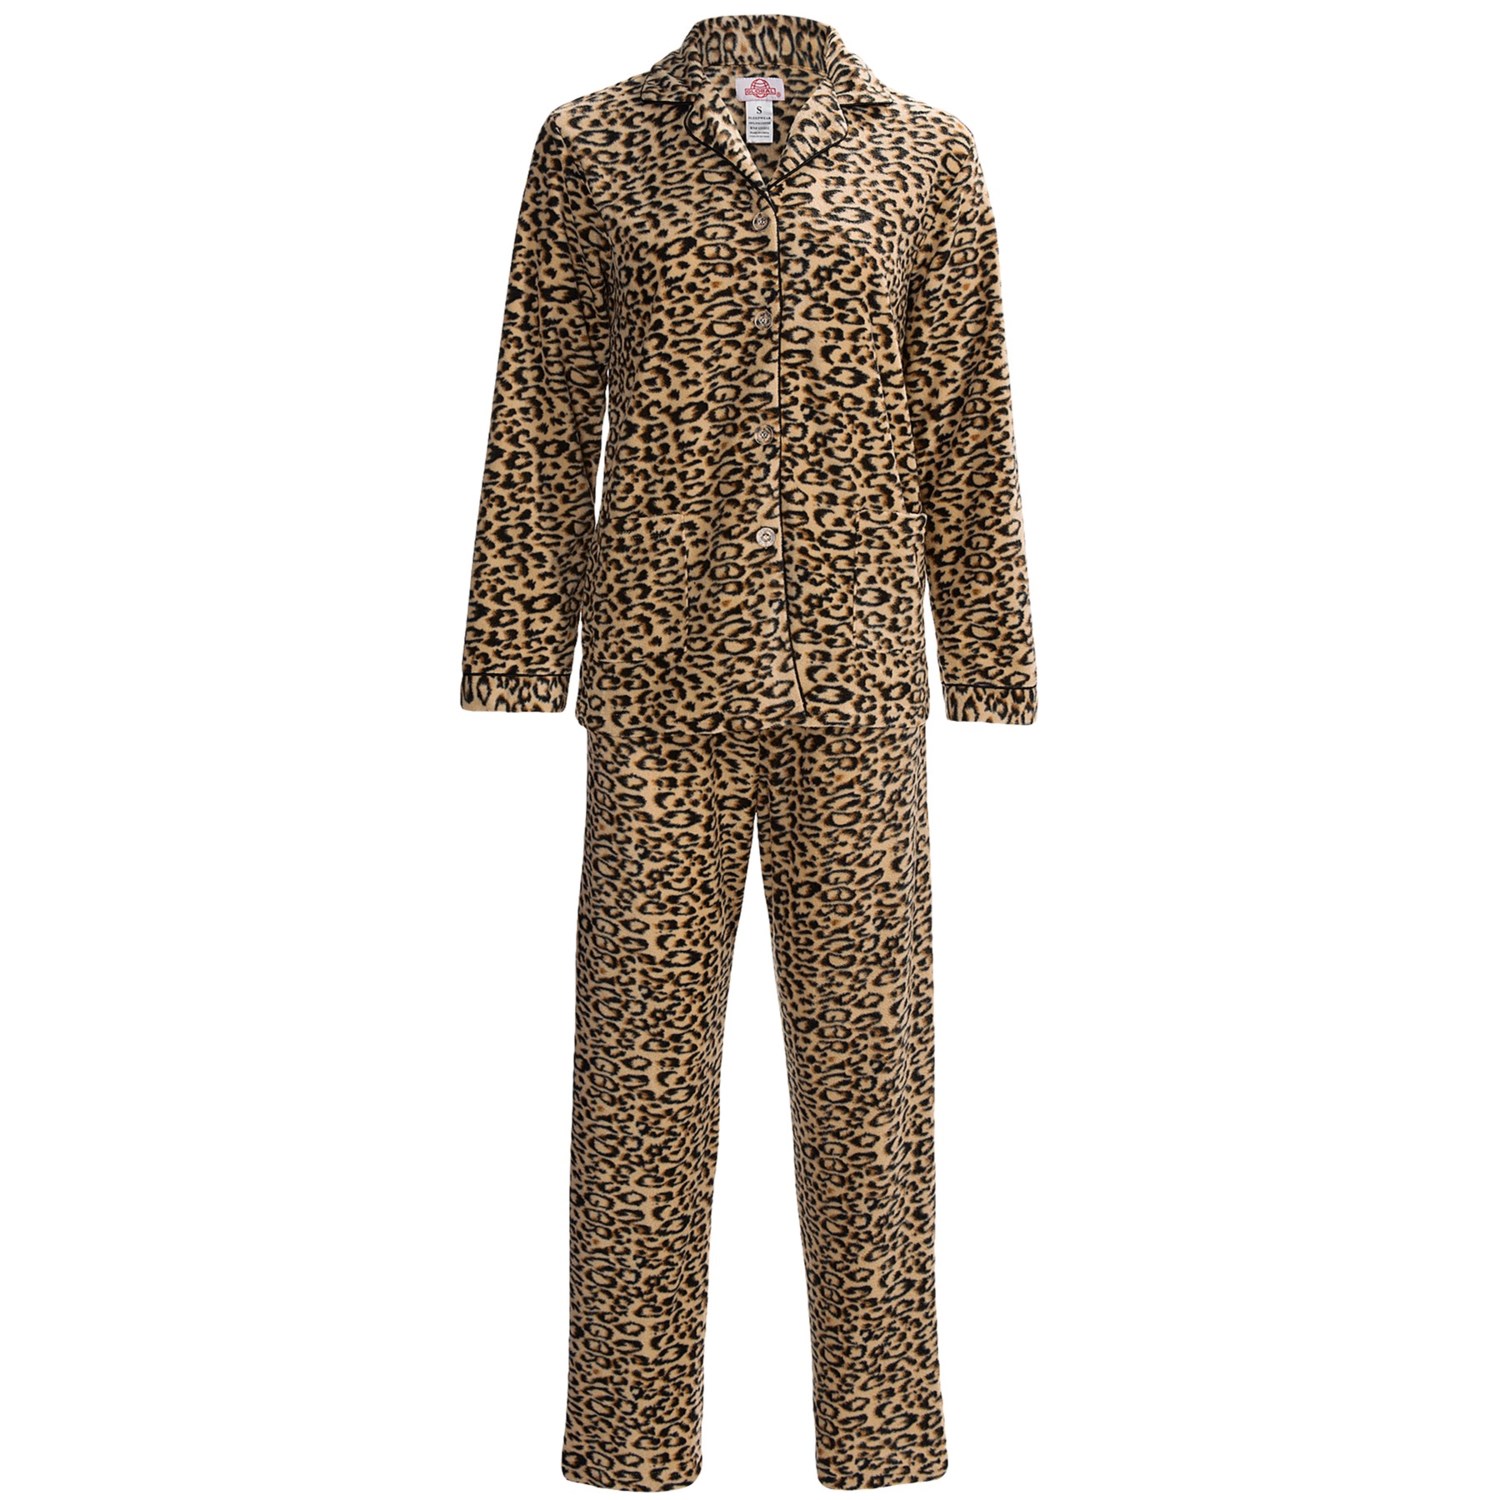 Global Polar Fleece Pajamas - Long Sleeve (For Women) in Tan Leopard